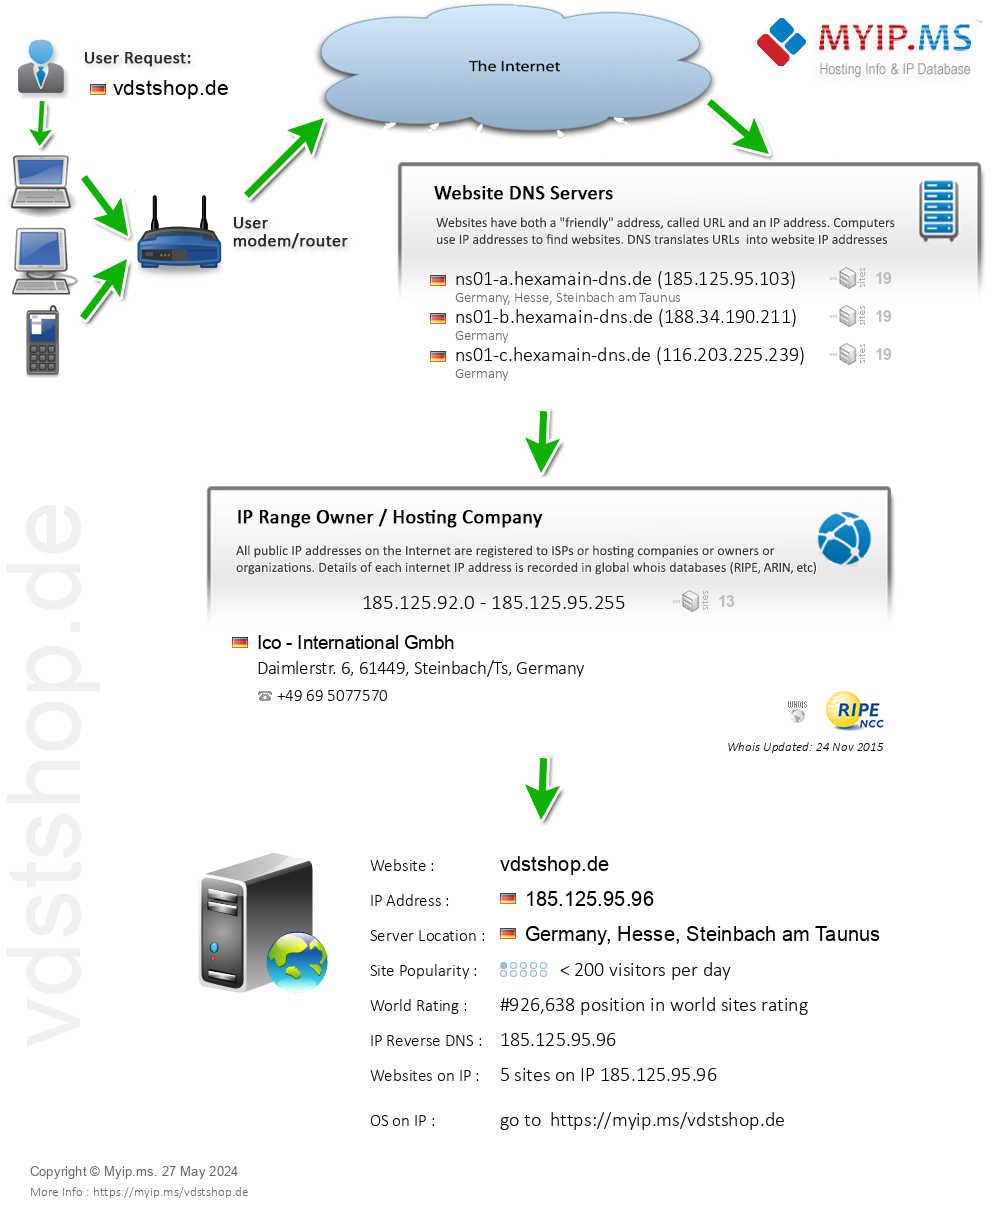 Vdstshop.de - Website Hosting Visual IP Diagram